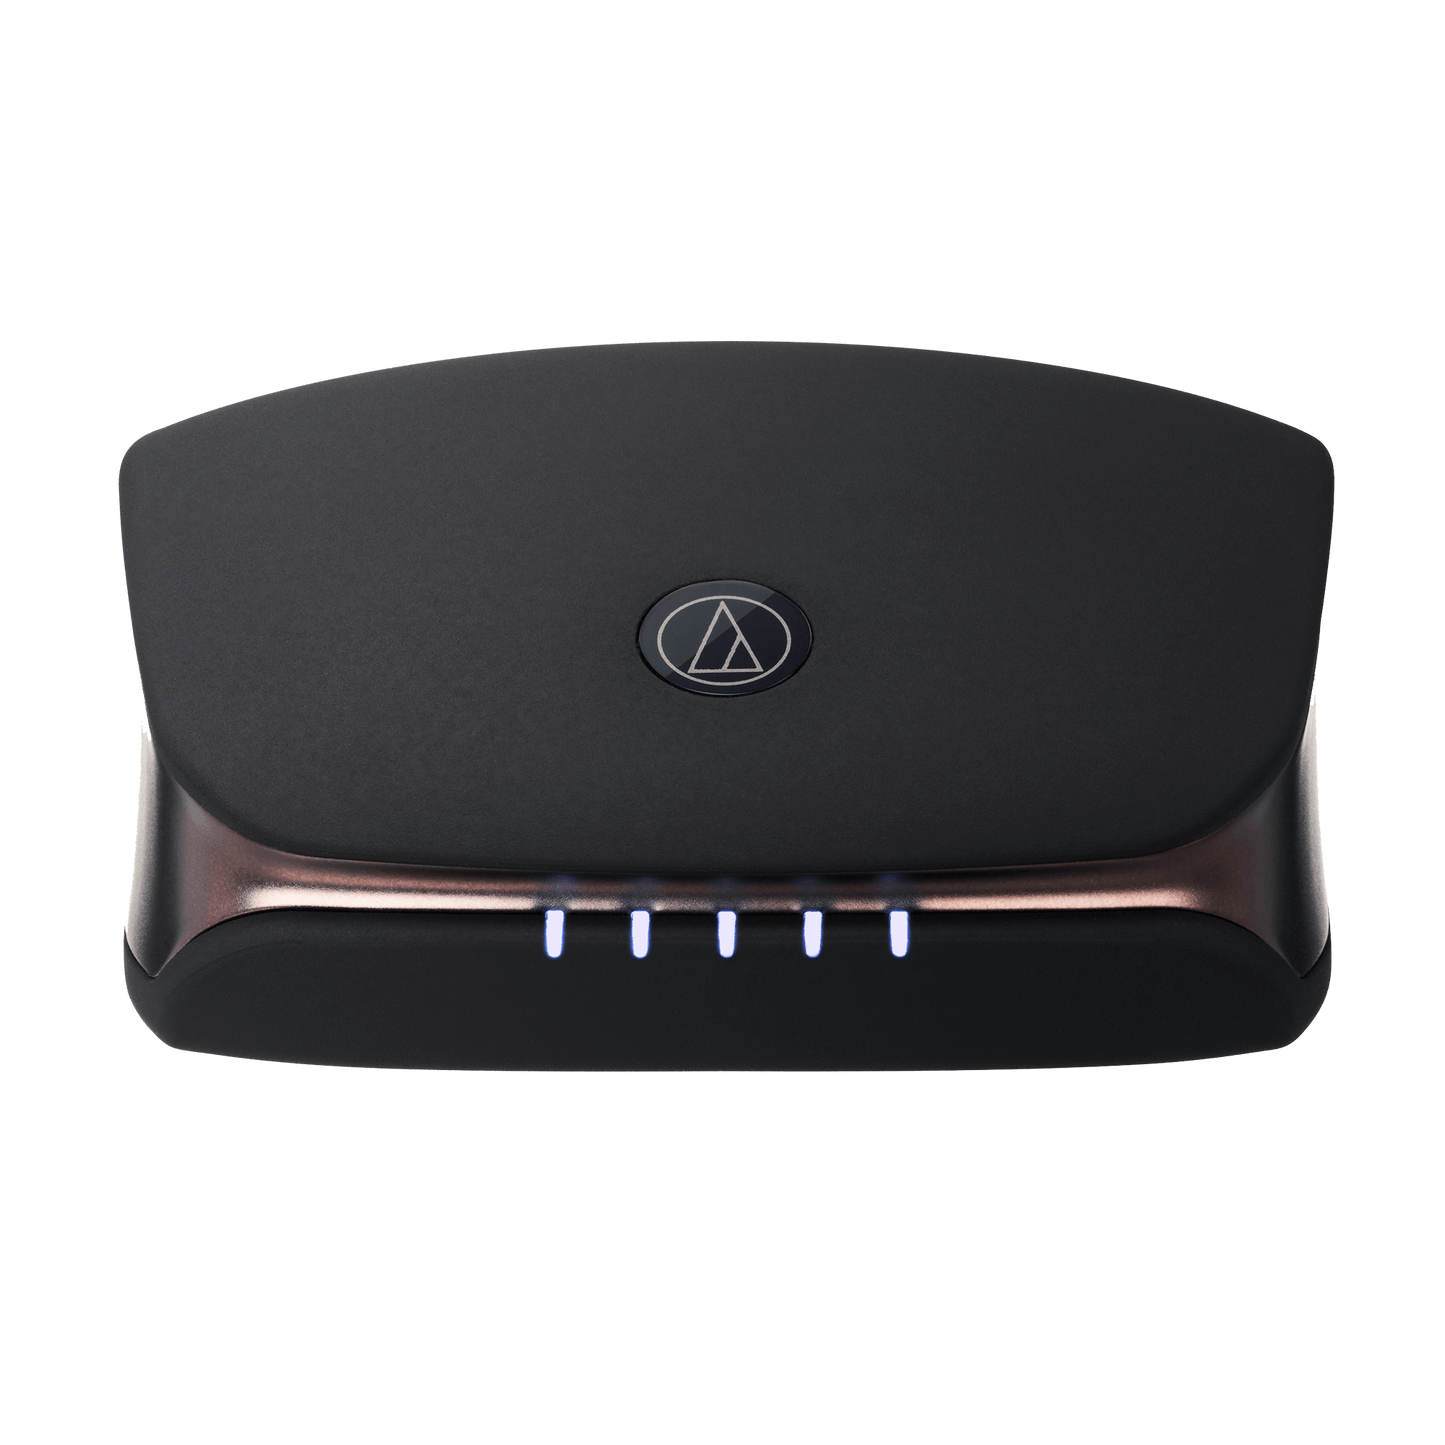 Audio Technica ATH-TWX9 wireless earbuds